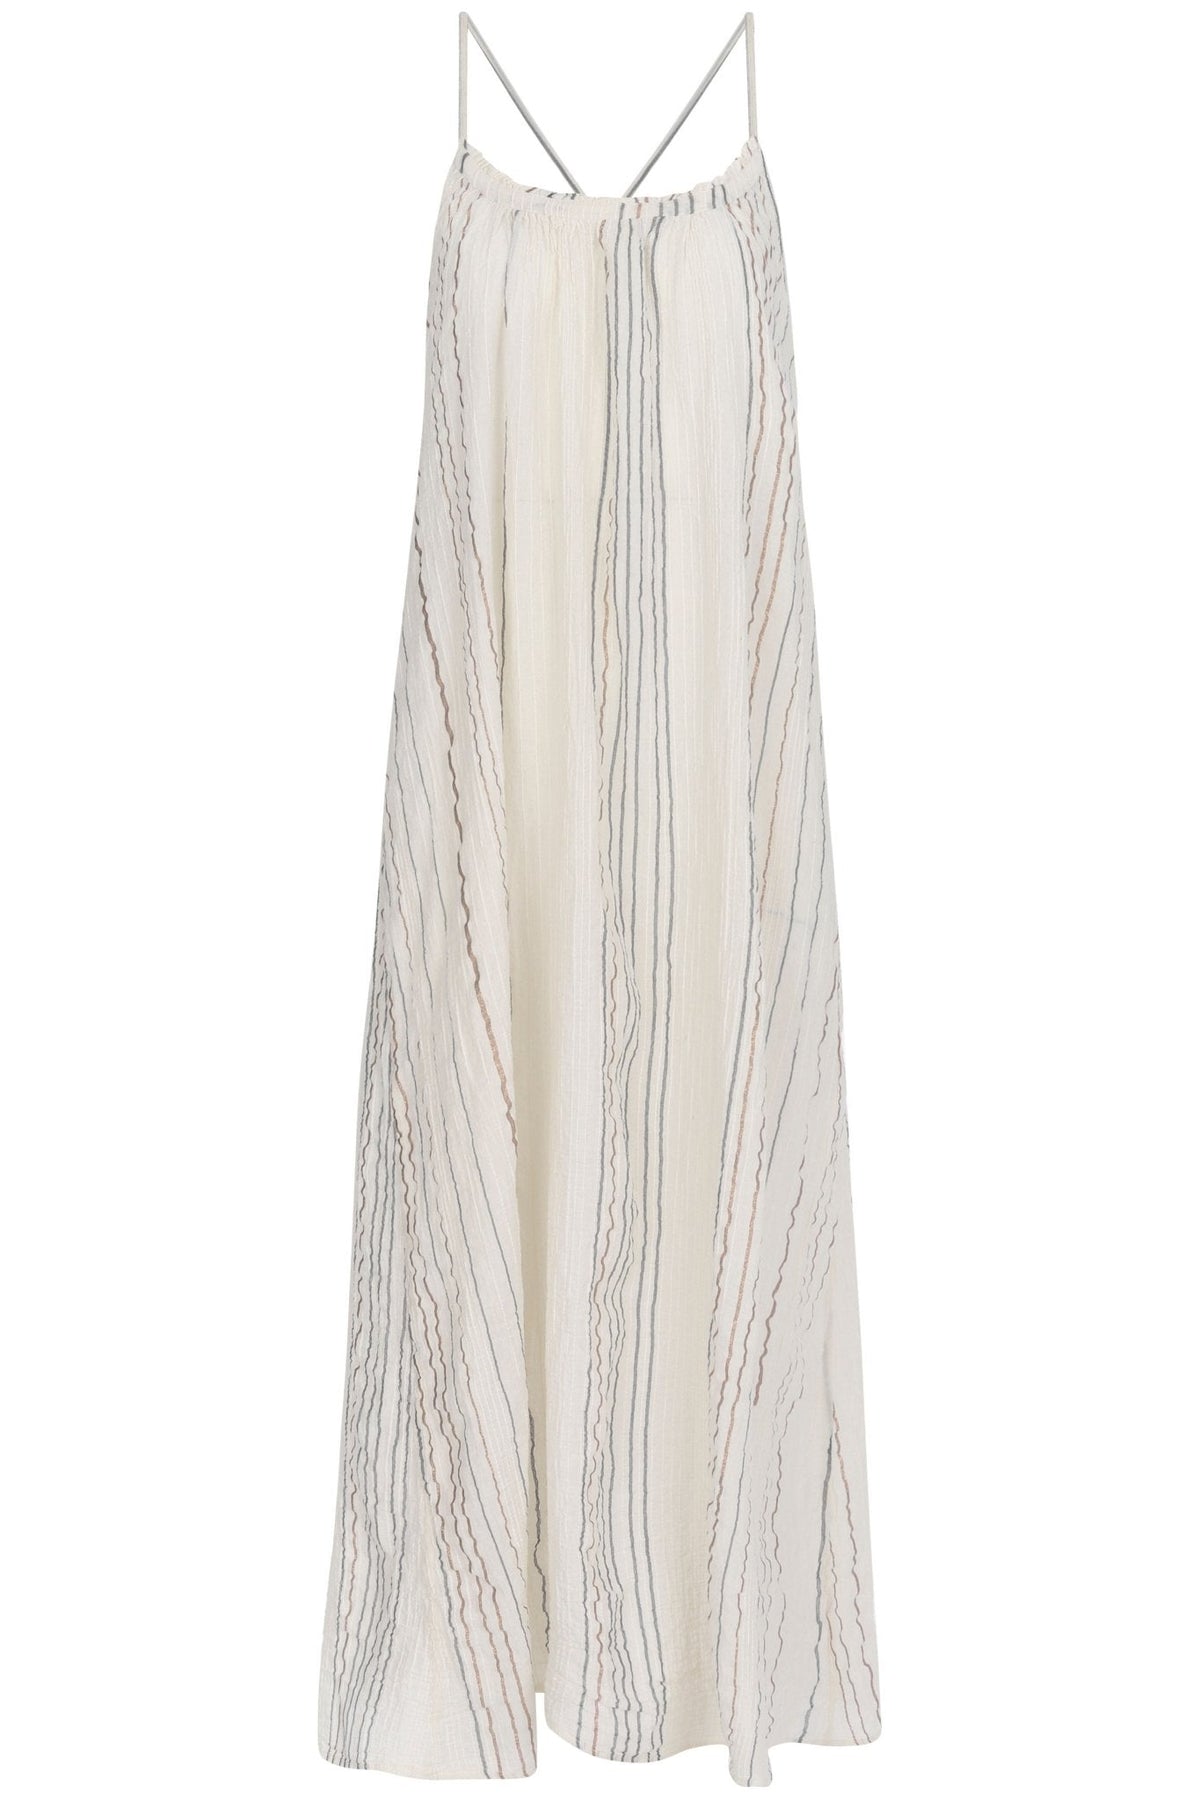 THE HAND LOOM Canggu Maxi 100% Organic Cotton Womens Dress - Natural With Stripes